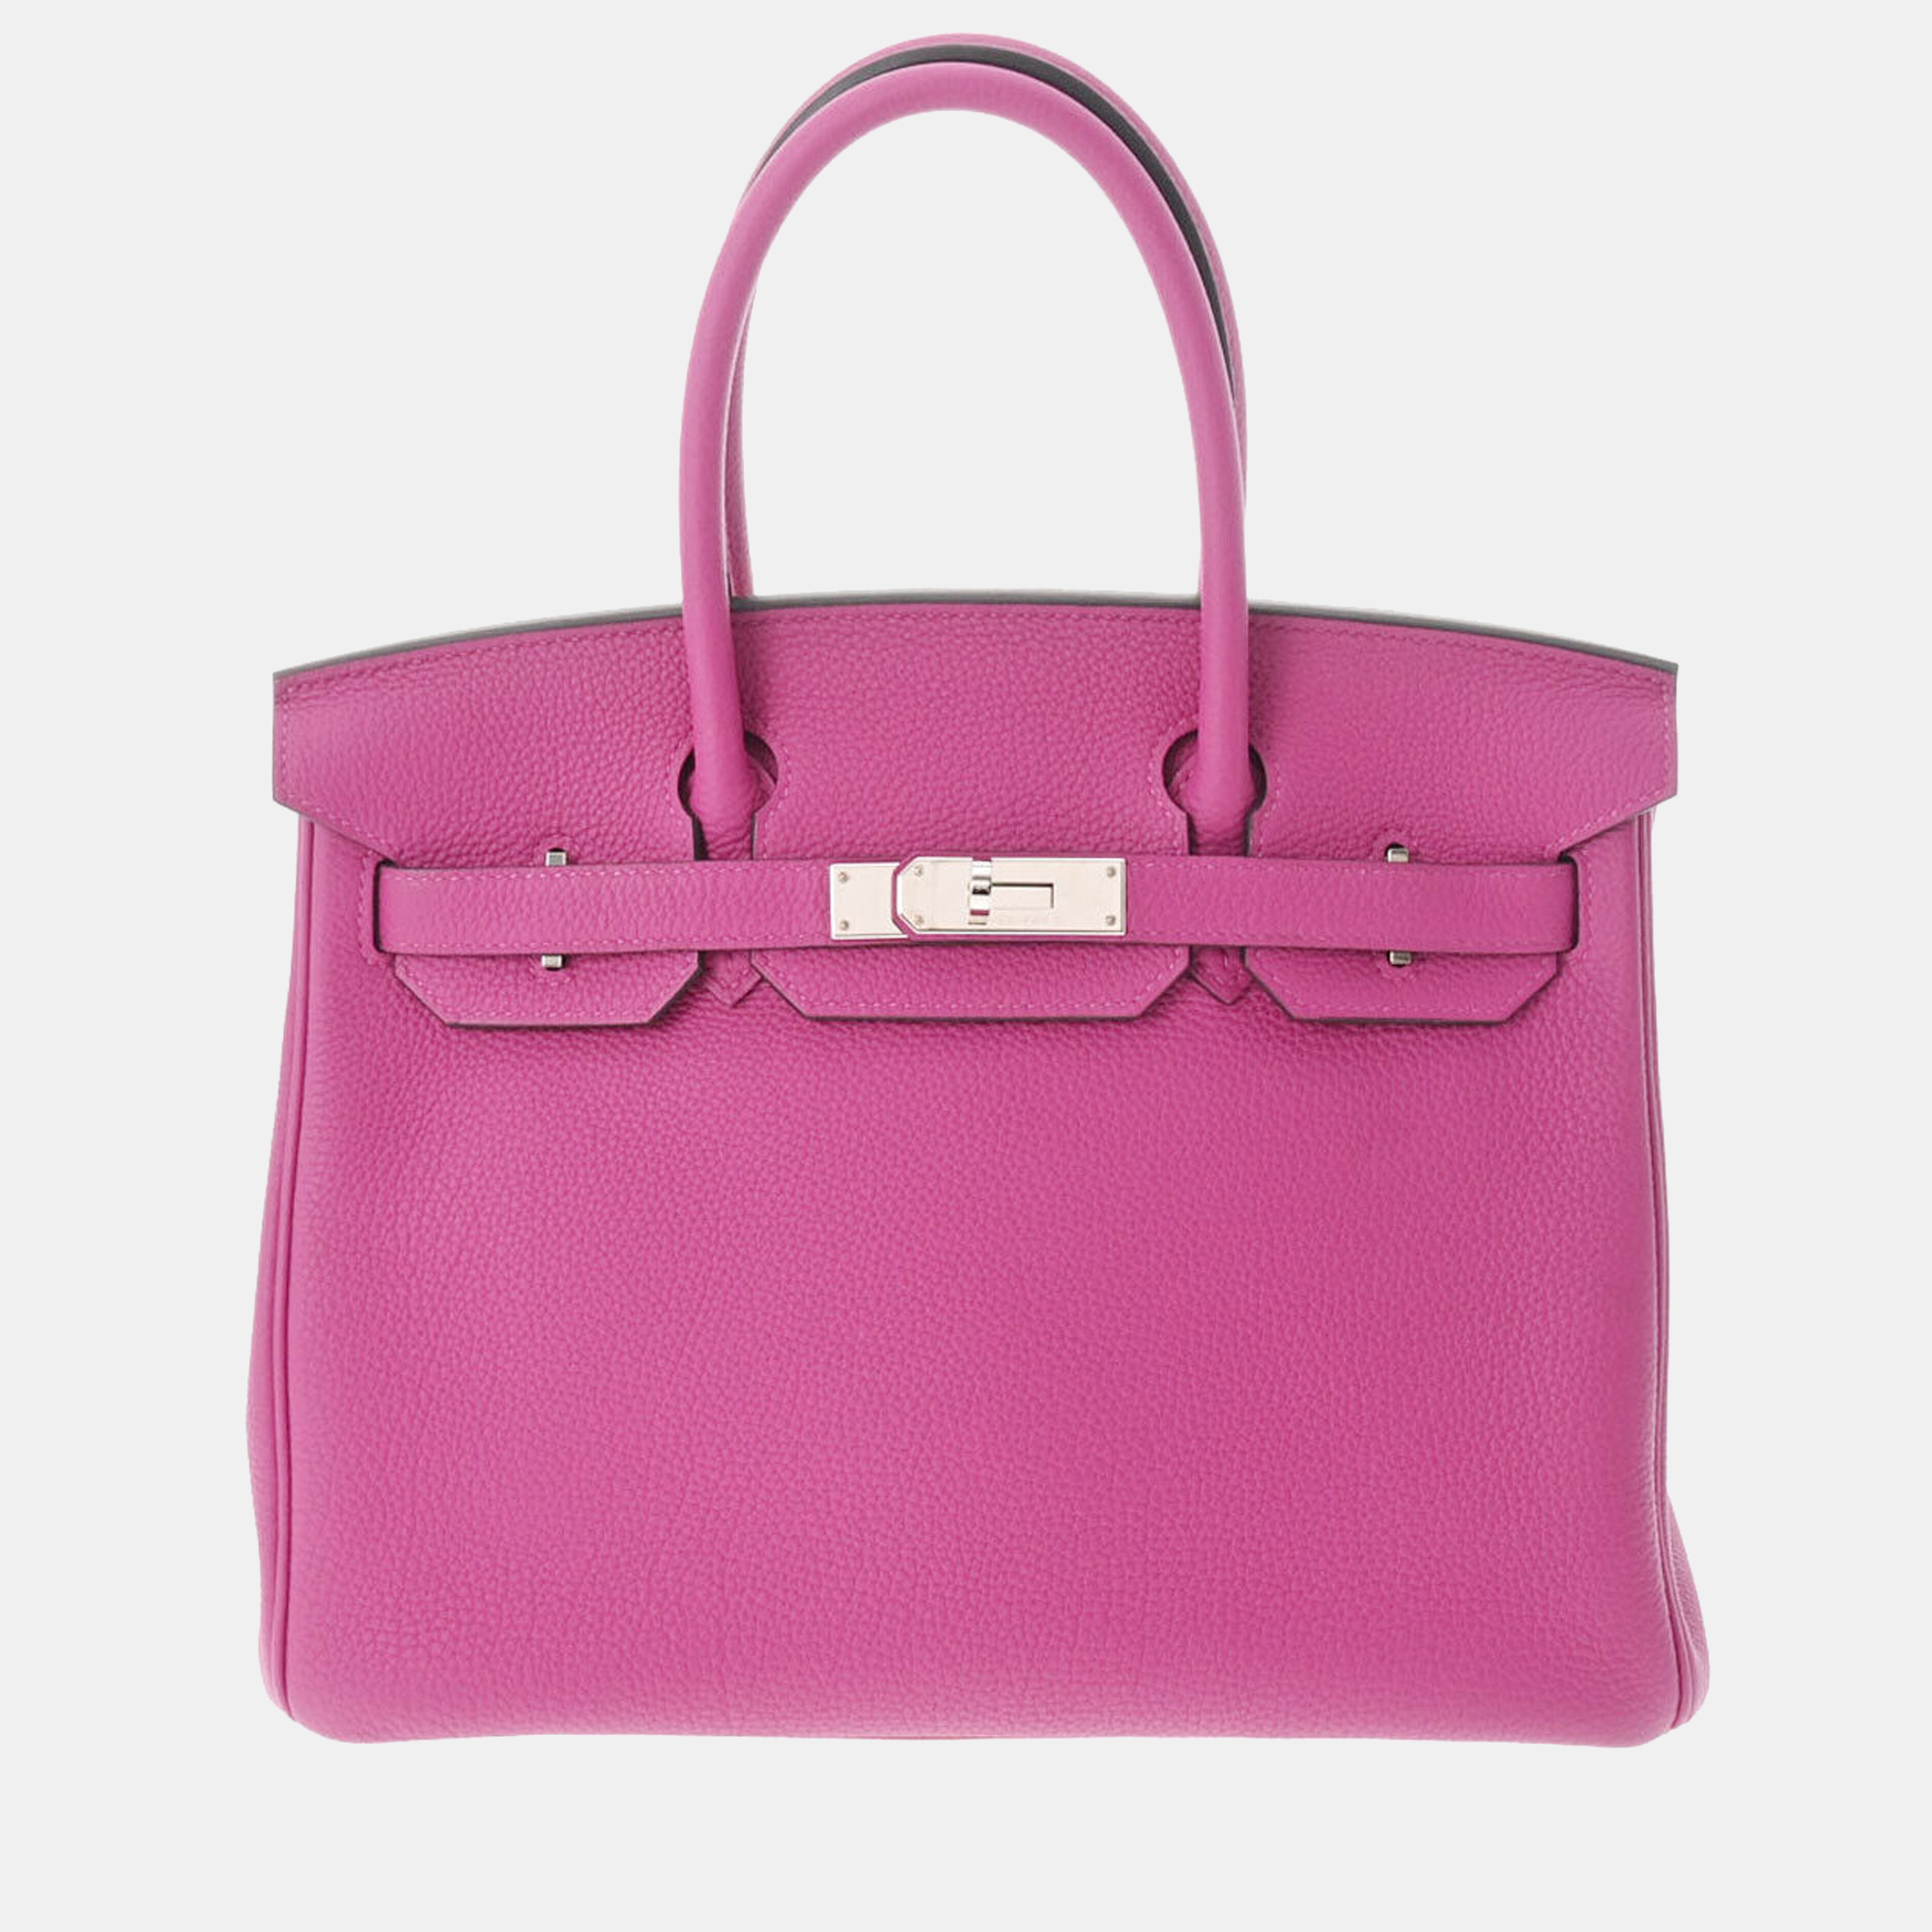 

Hermes Pink Togo Leather Palladium Hardware Birkin 30 Bag